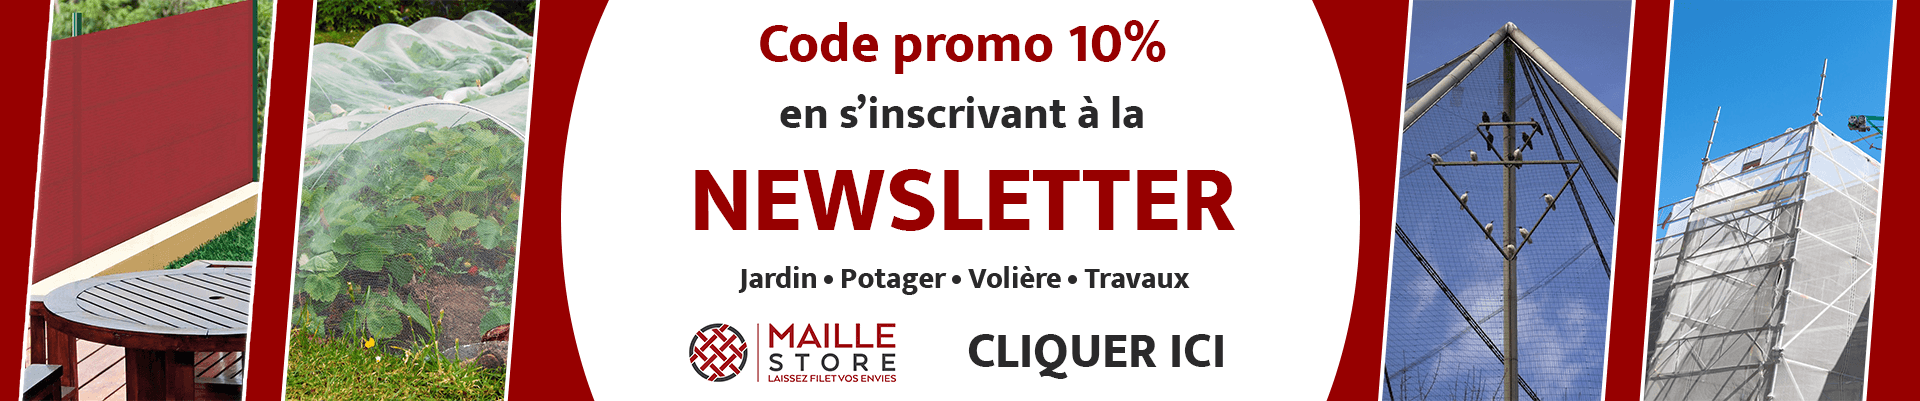 code-promo-maille-store-filet-inscription-newsletter-2